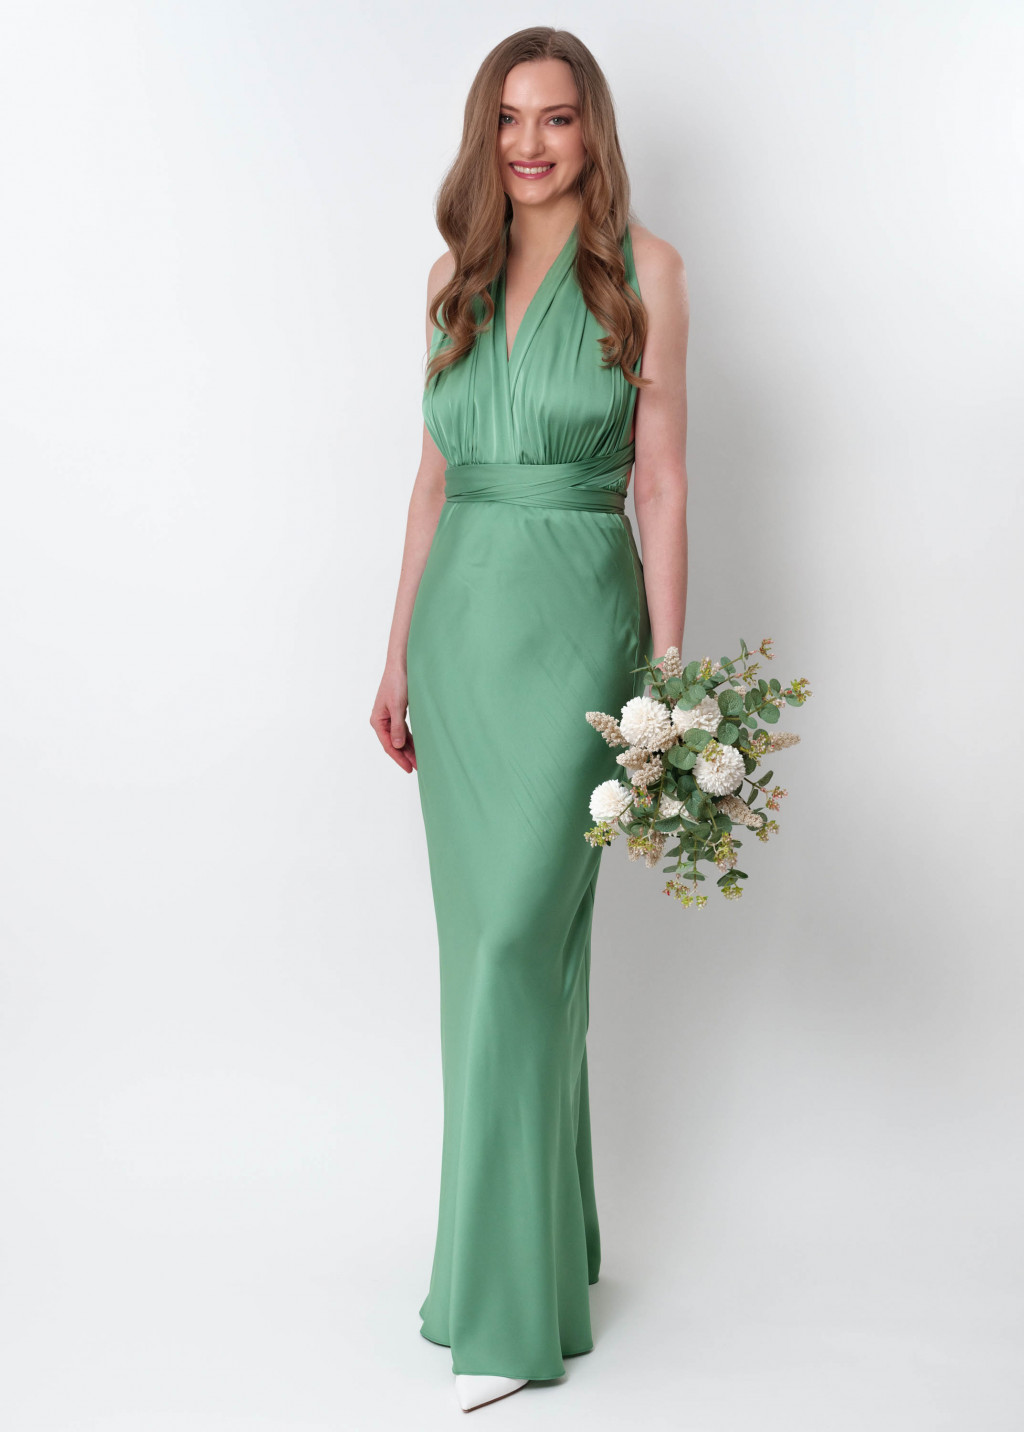 Olive green infinity long dress